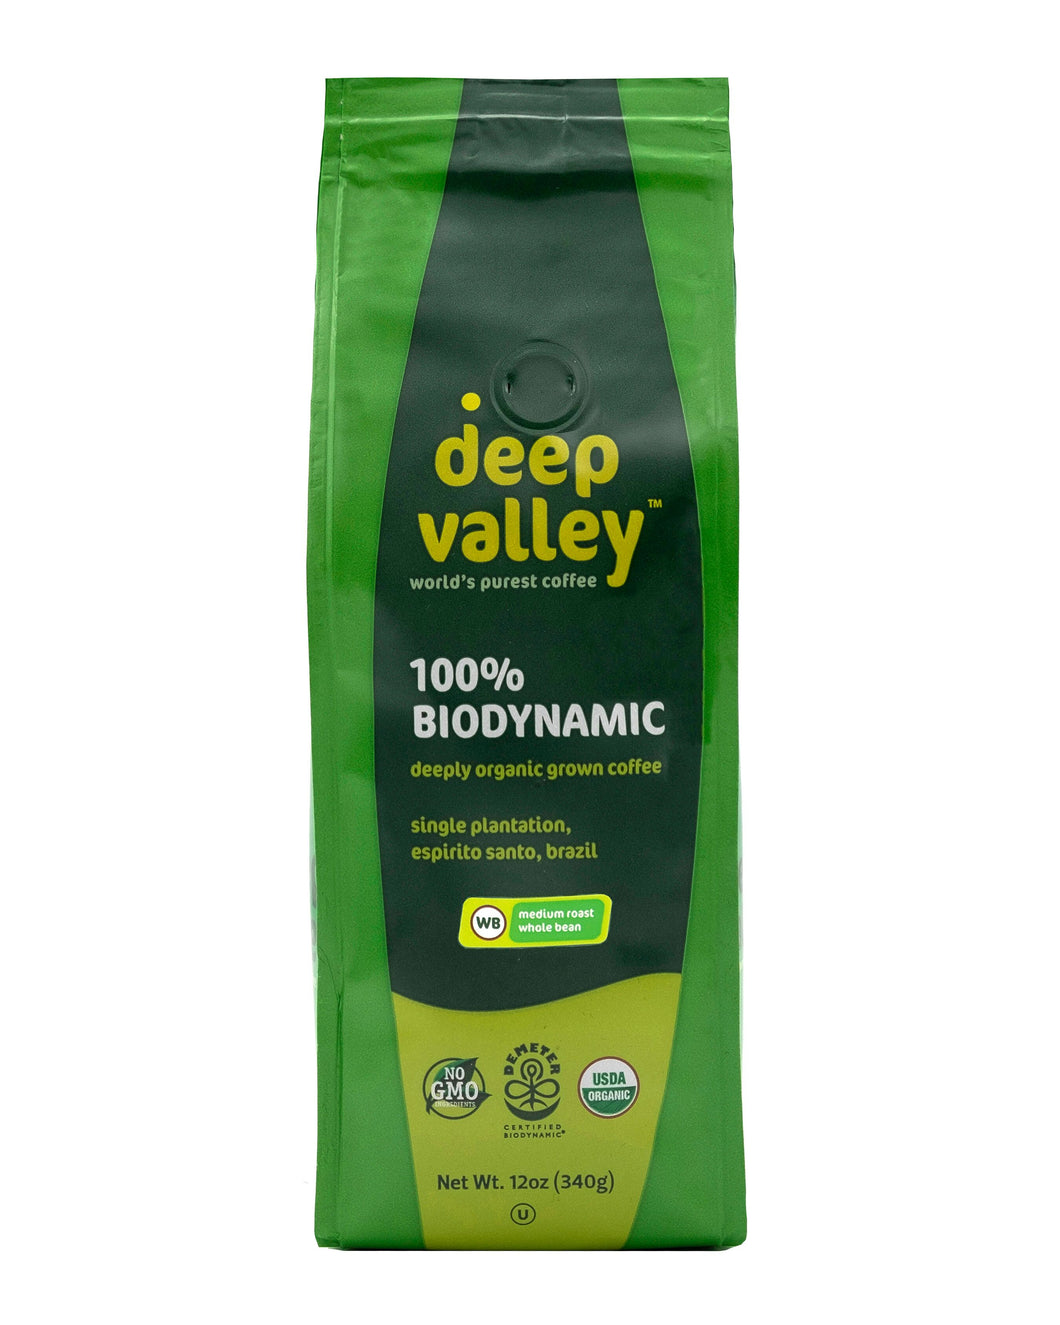 Deep Valley Biodynamic Coffee Beans - Medium Roast 長谷生物動力有機咖啡豆 - 中烘焙 (340g)